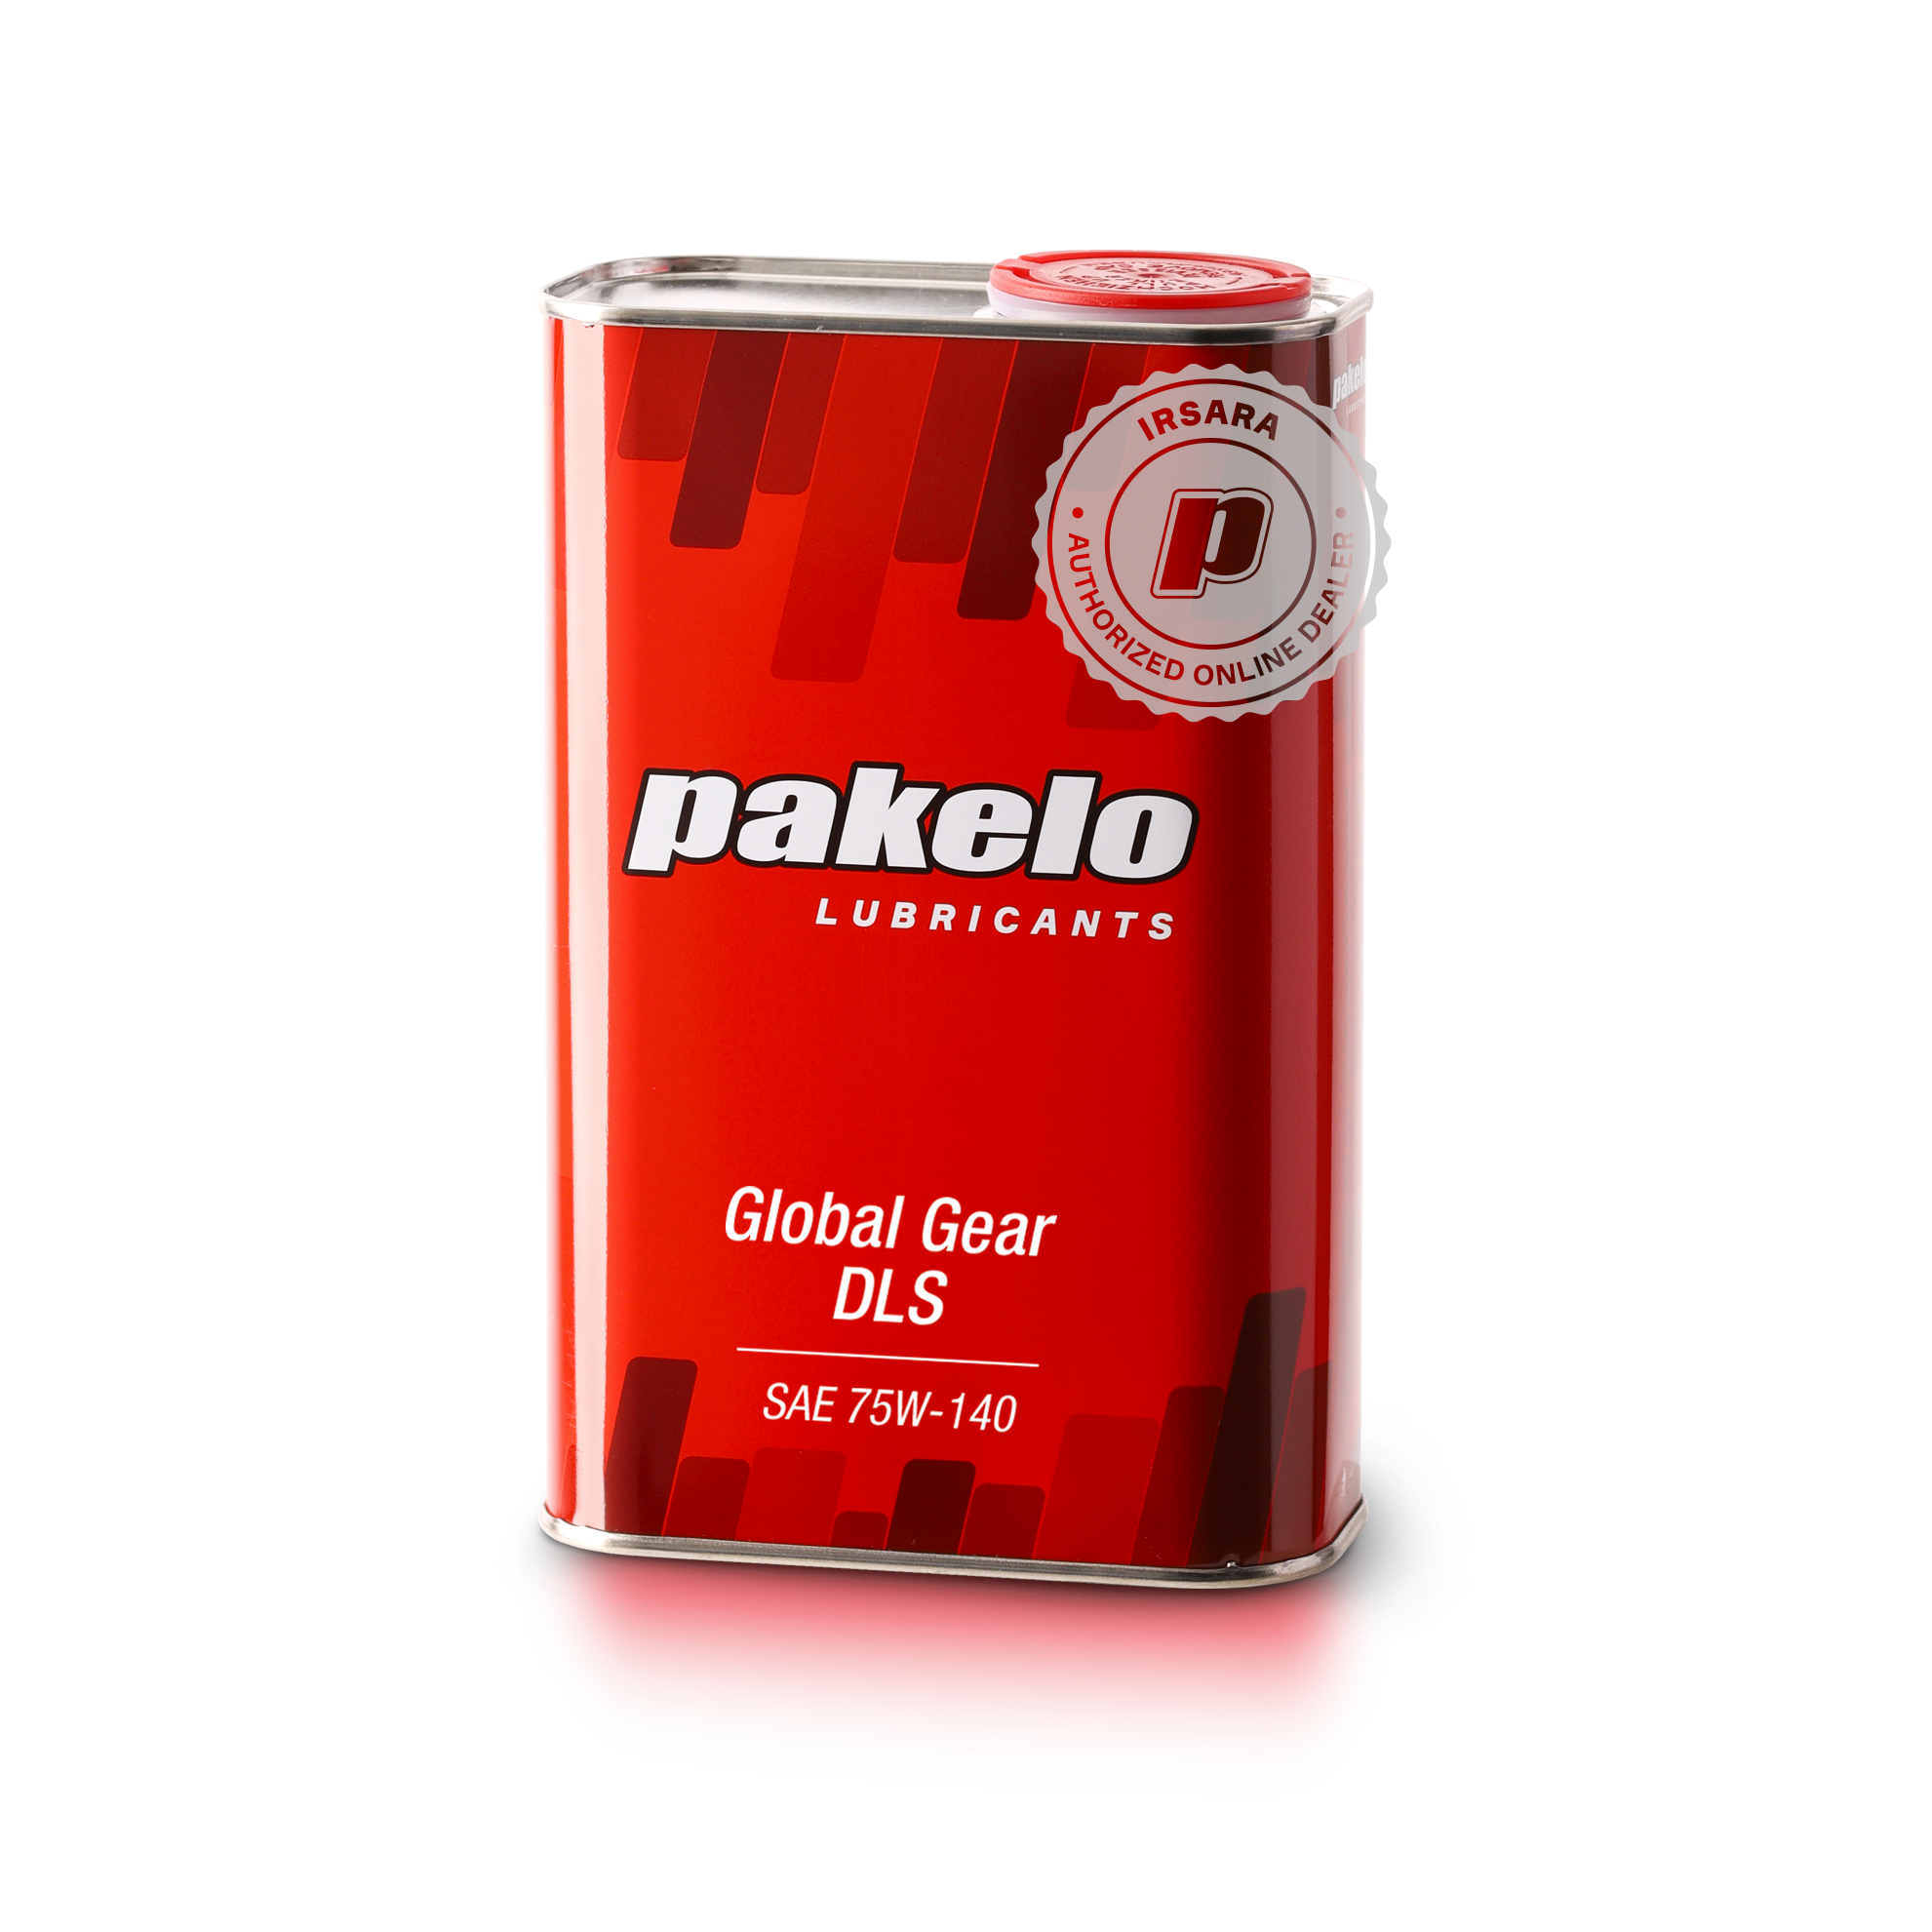 Pakelo Global Gear Dls Sae 75W-140 (1 L